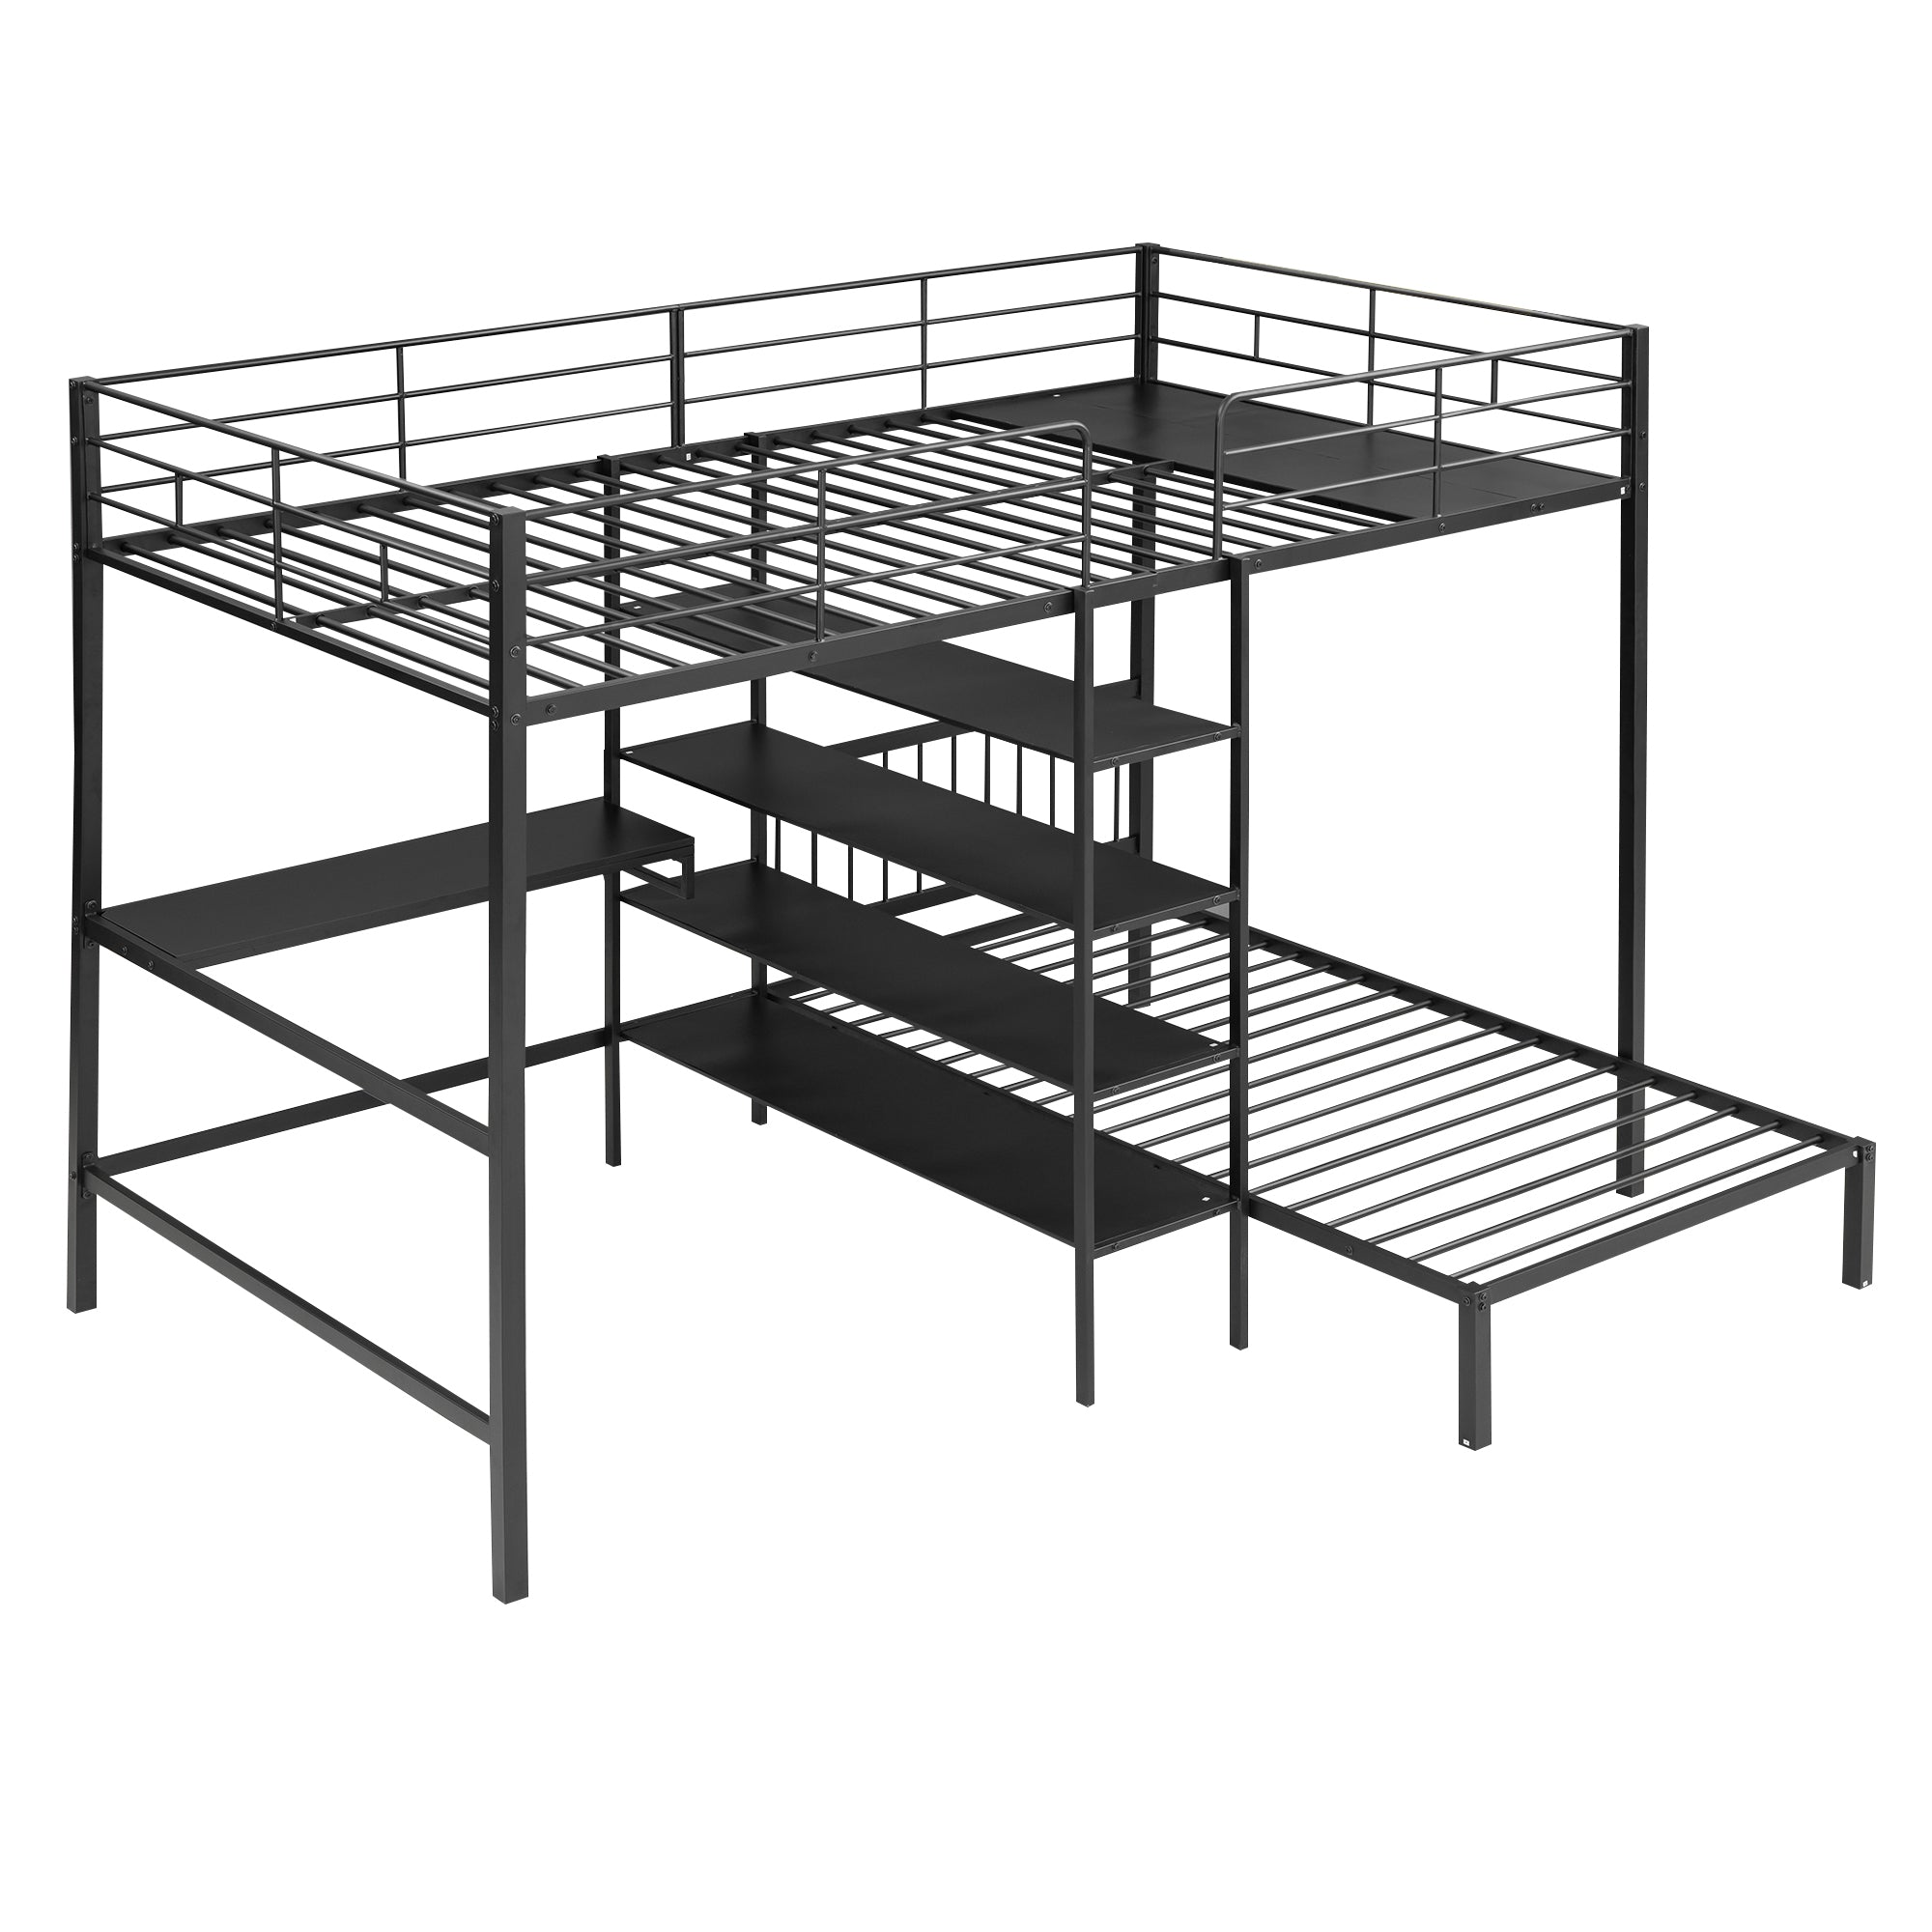 Bellemave® Full Over Twin Metal Bunk Bed with Built-in Desk, Shelves and Ladder Bellemave®